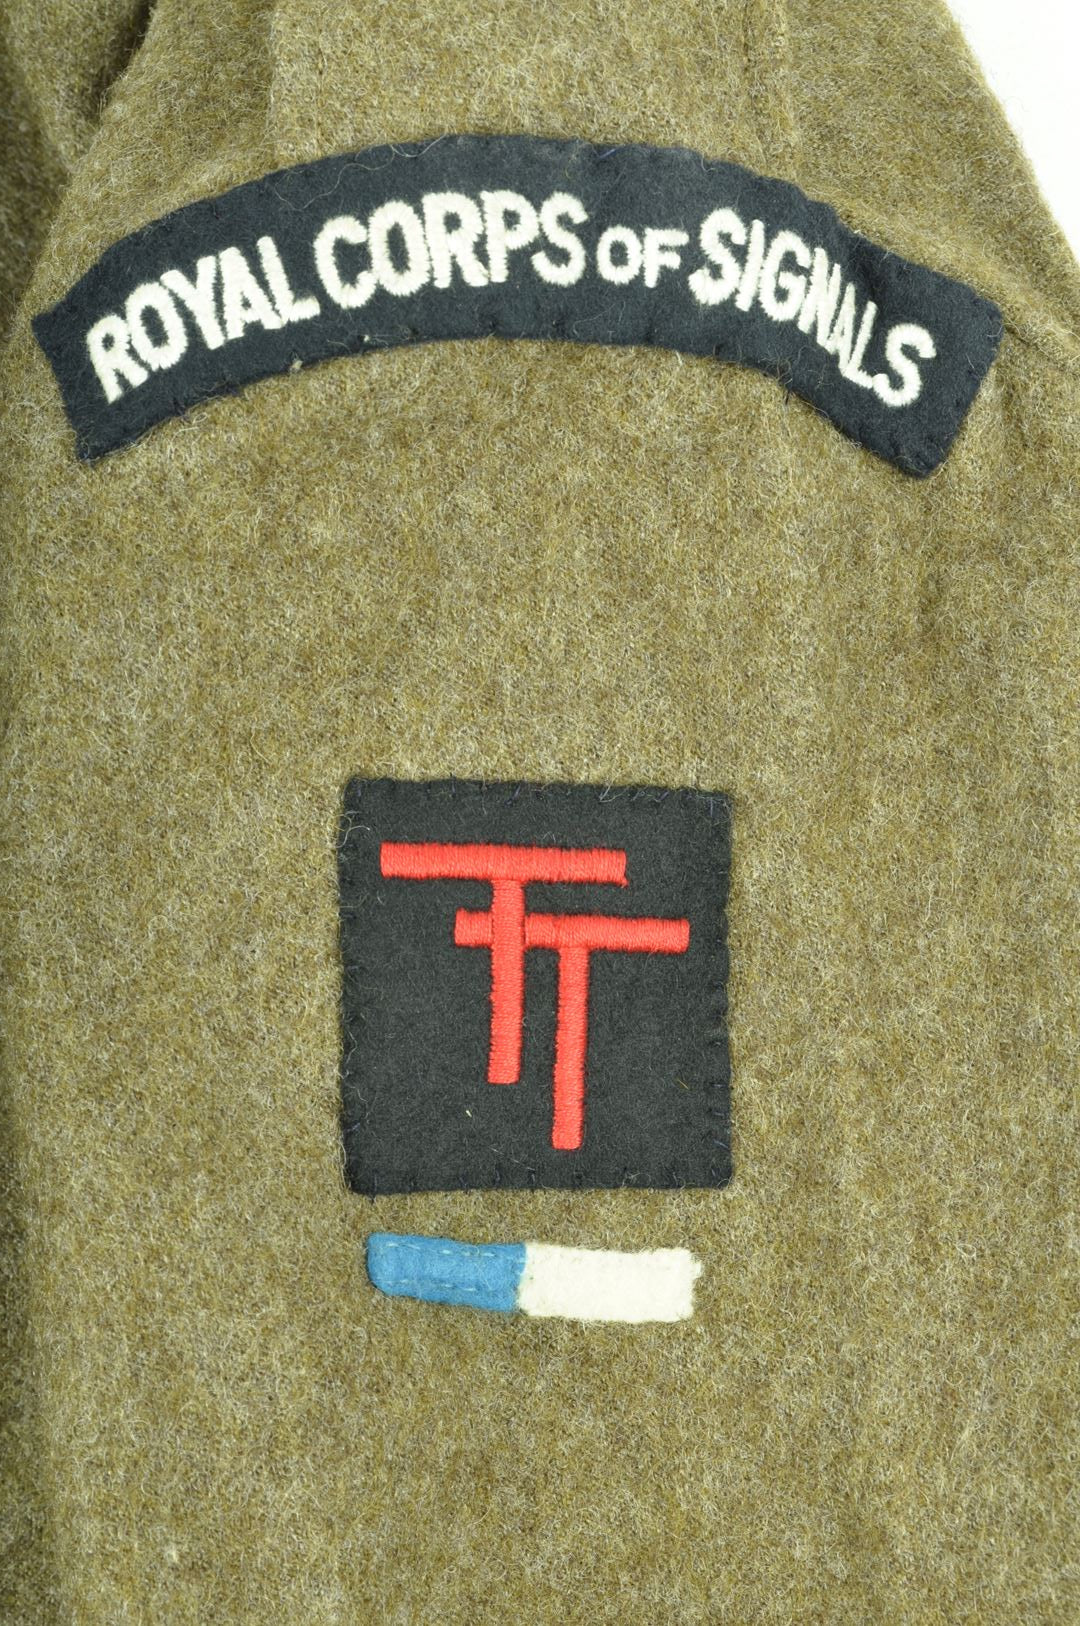 Blouson Battle Dress pattern 40 "Royal Corps of Signals" + Brassard